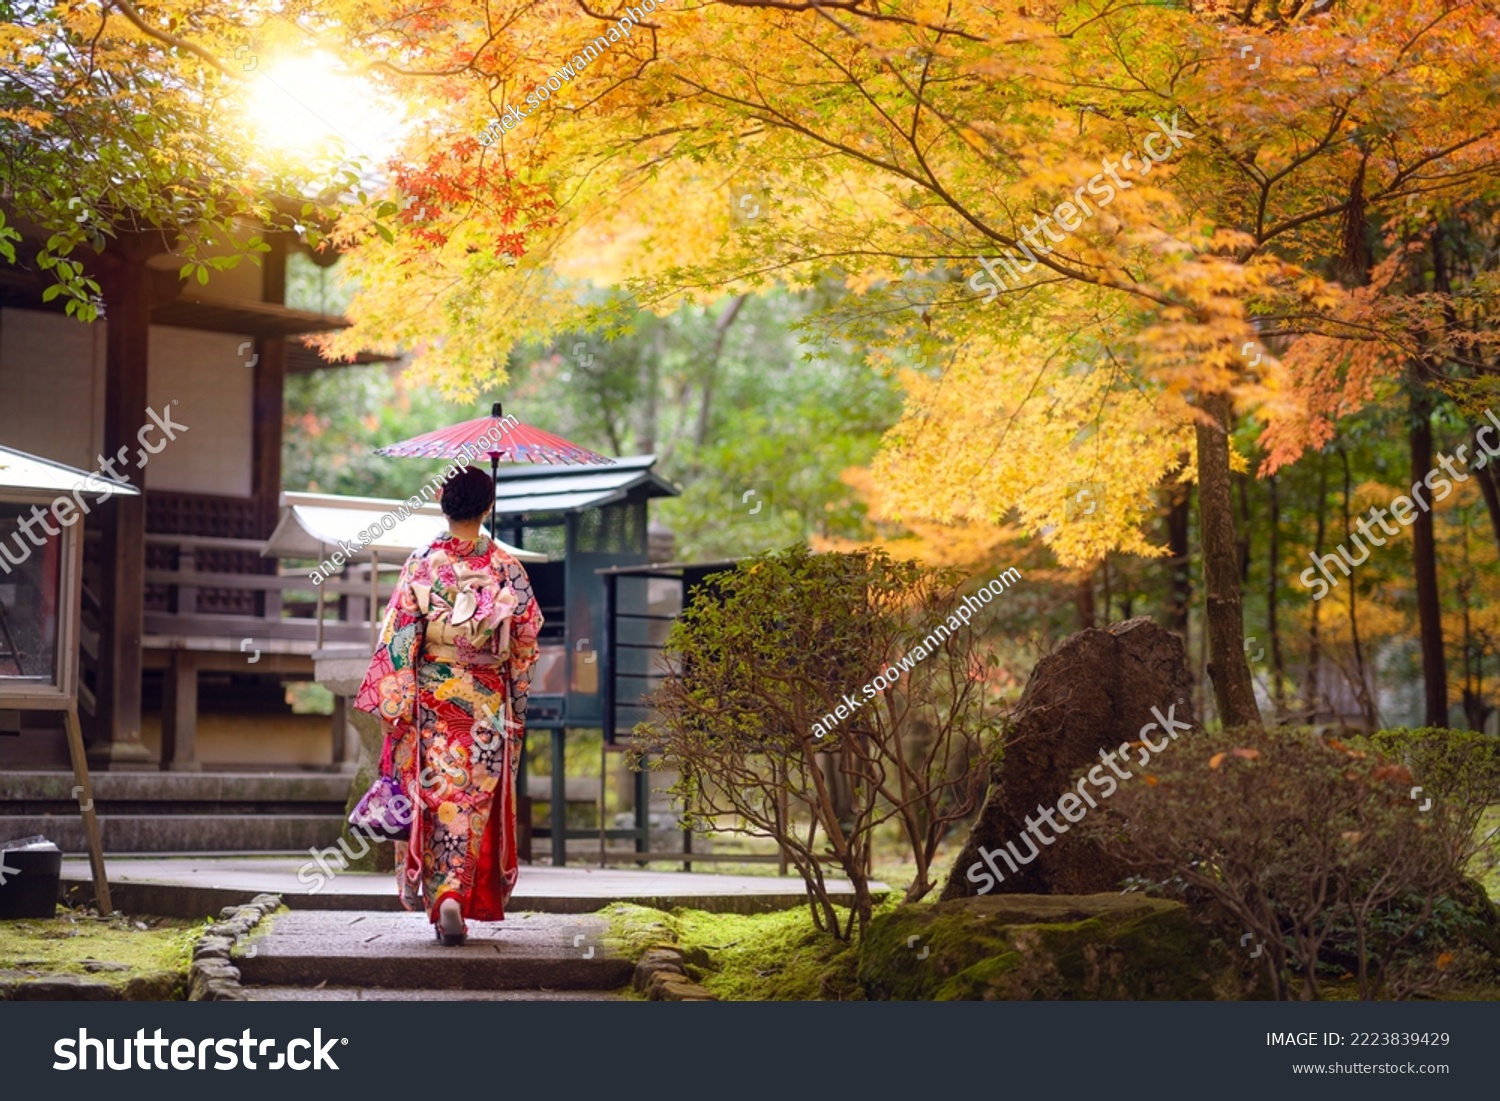 Asian traveler girl in Kimono traditional dress walking in old temple in Autumn season in Kyoto city, Japan #2223839429